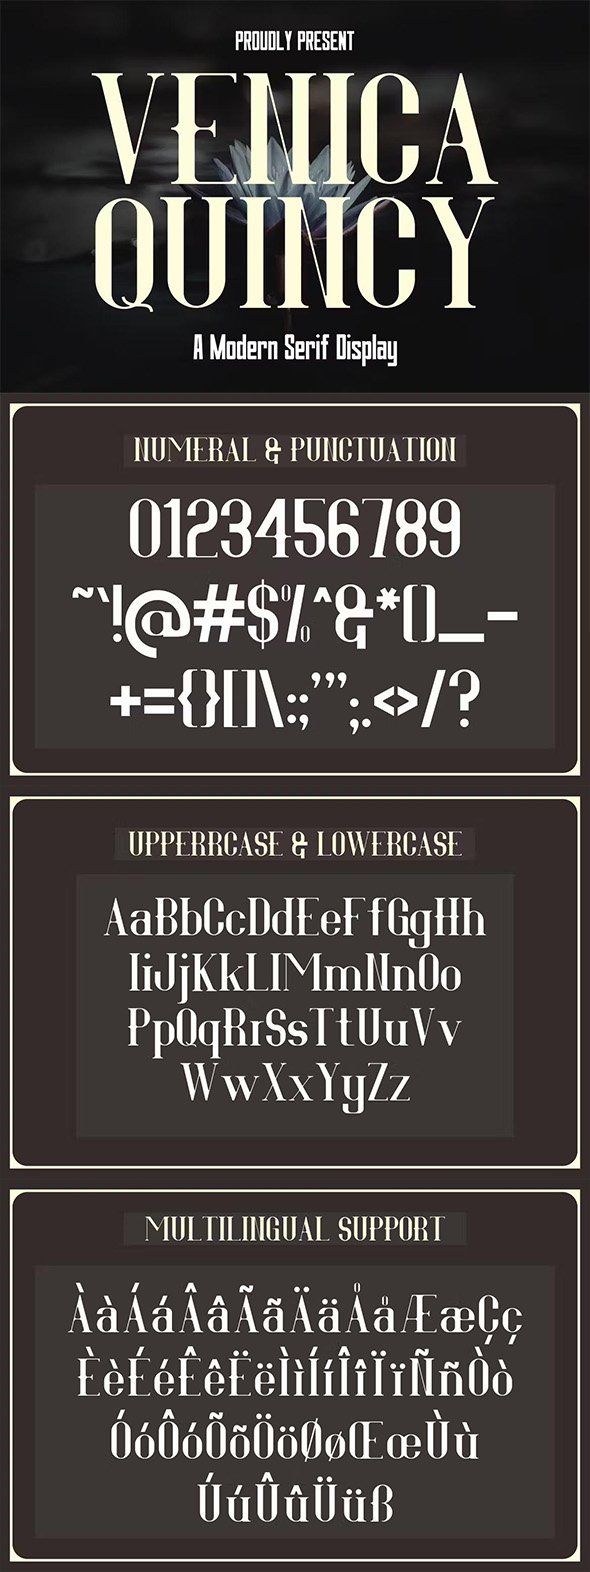 Venica Quincy - Modern Serif Display - 4BUZMZE